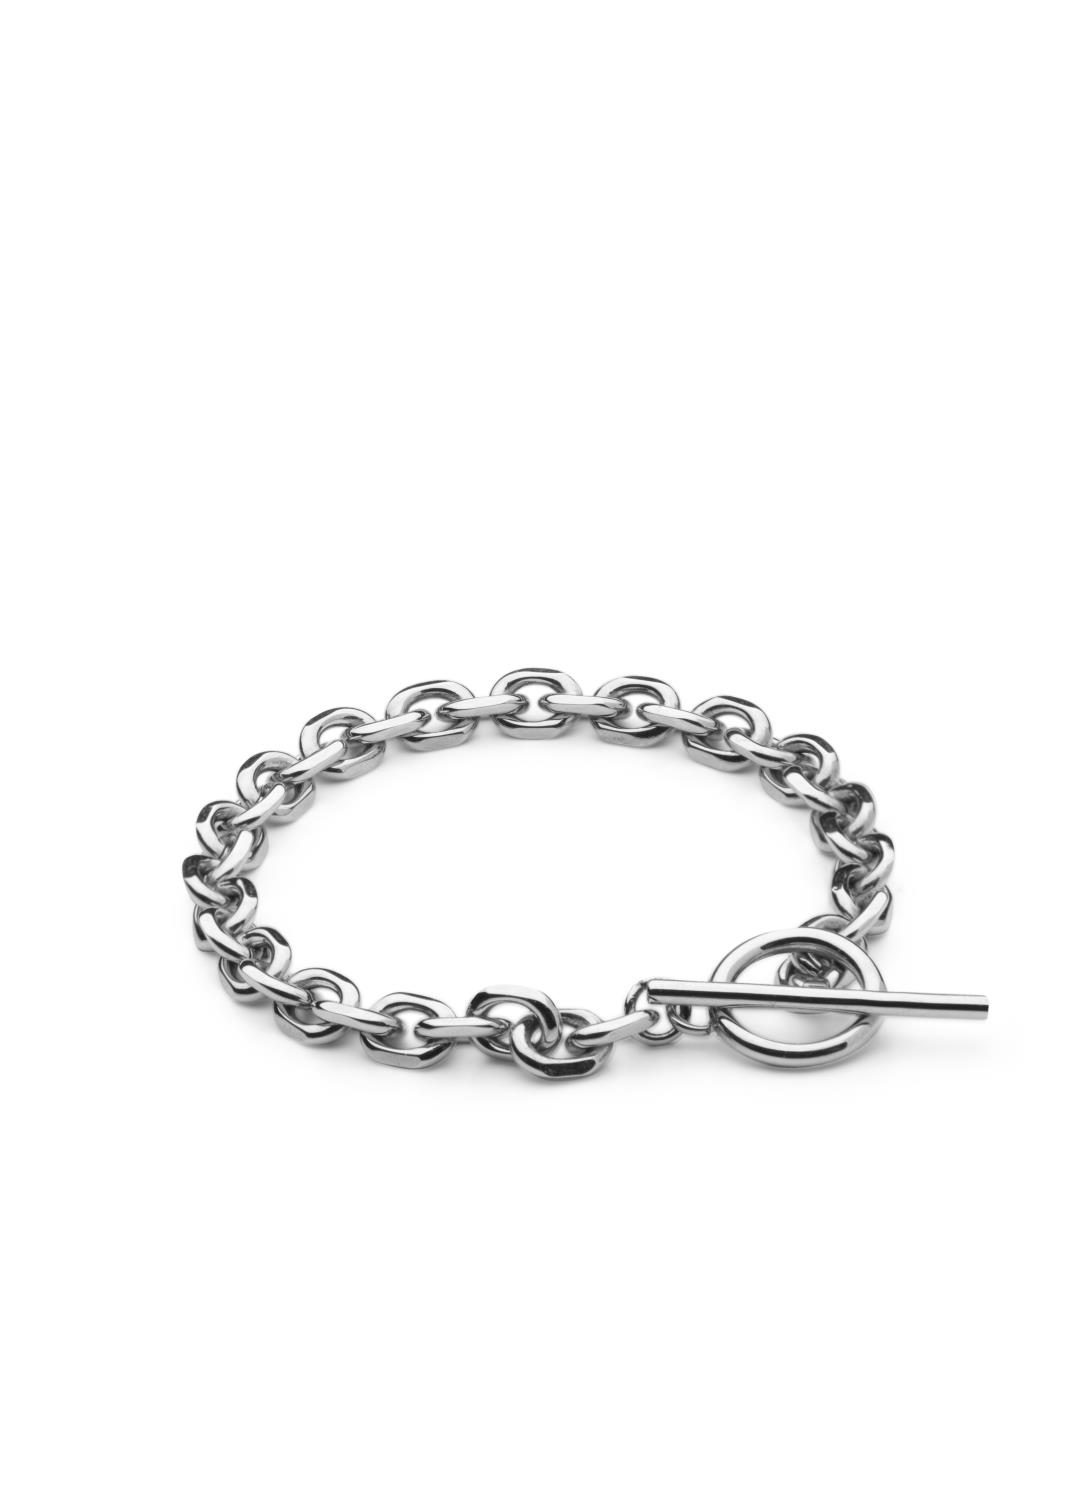 Skultuna - Unite Chain Bracelet - Polished Steel